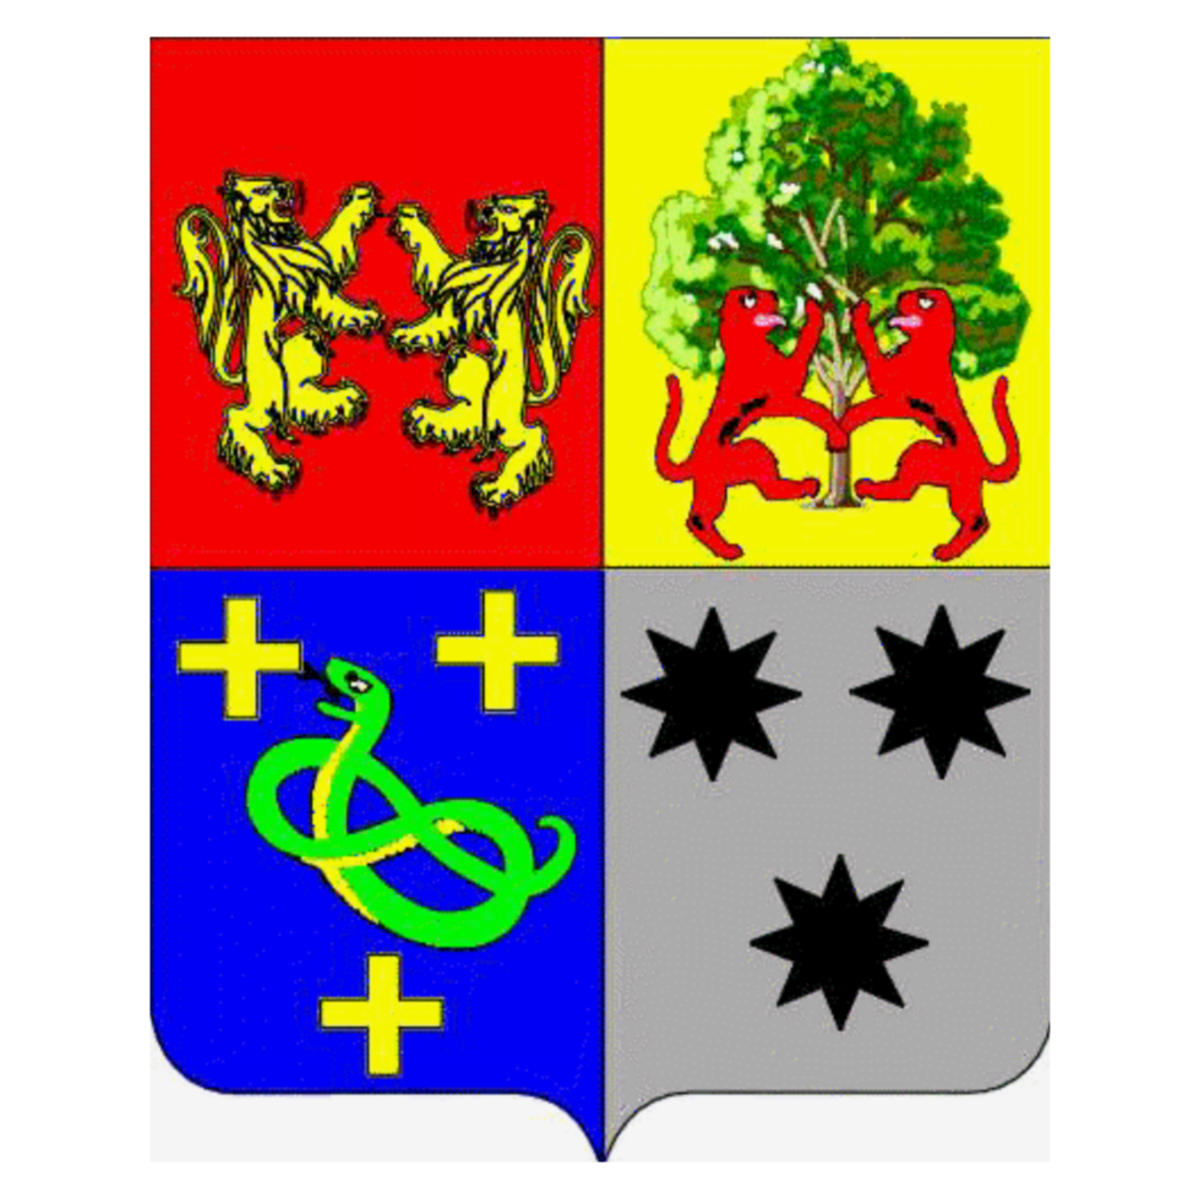 Coat of arms of familyLaborda